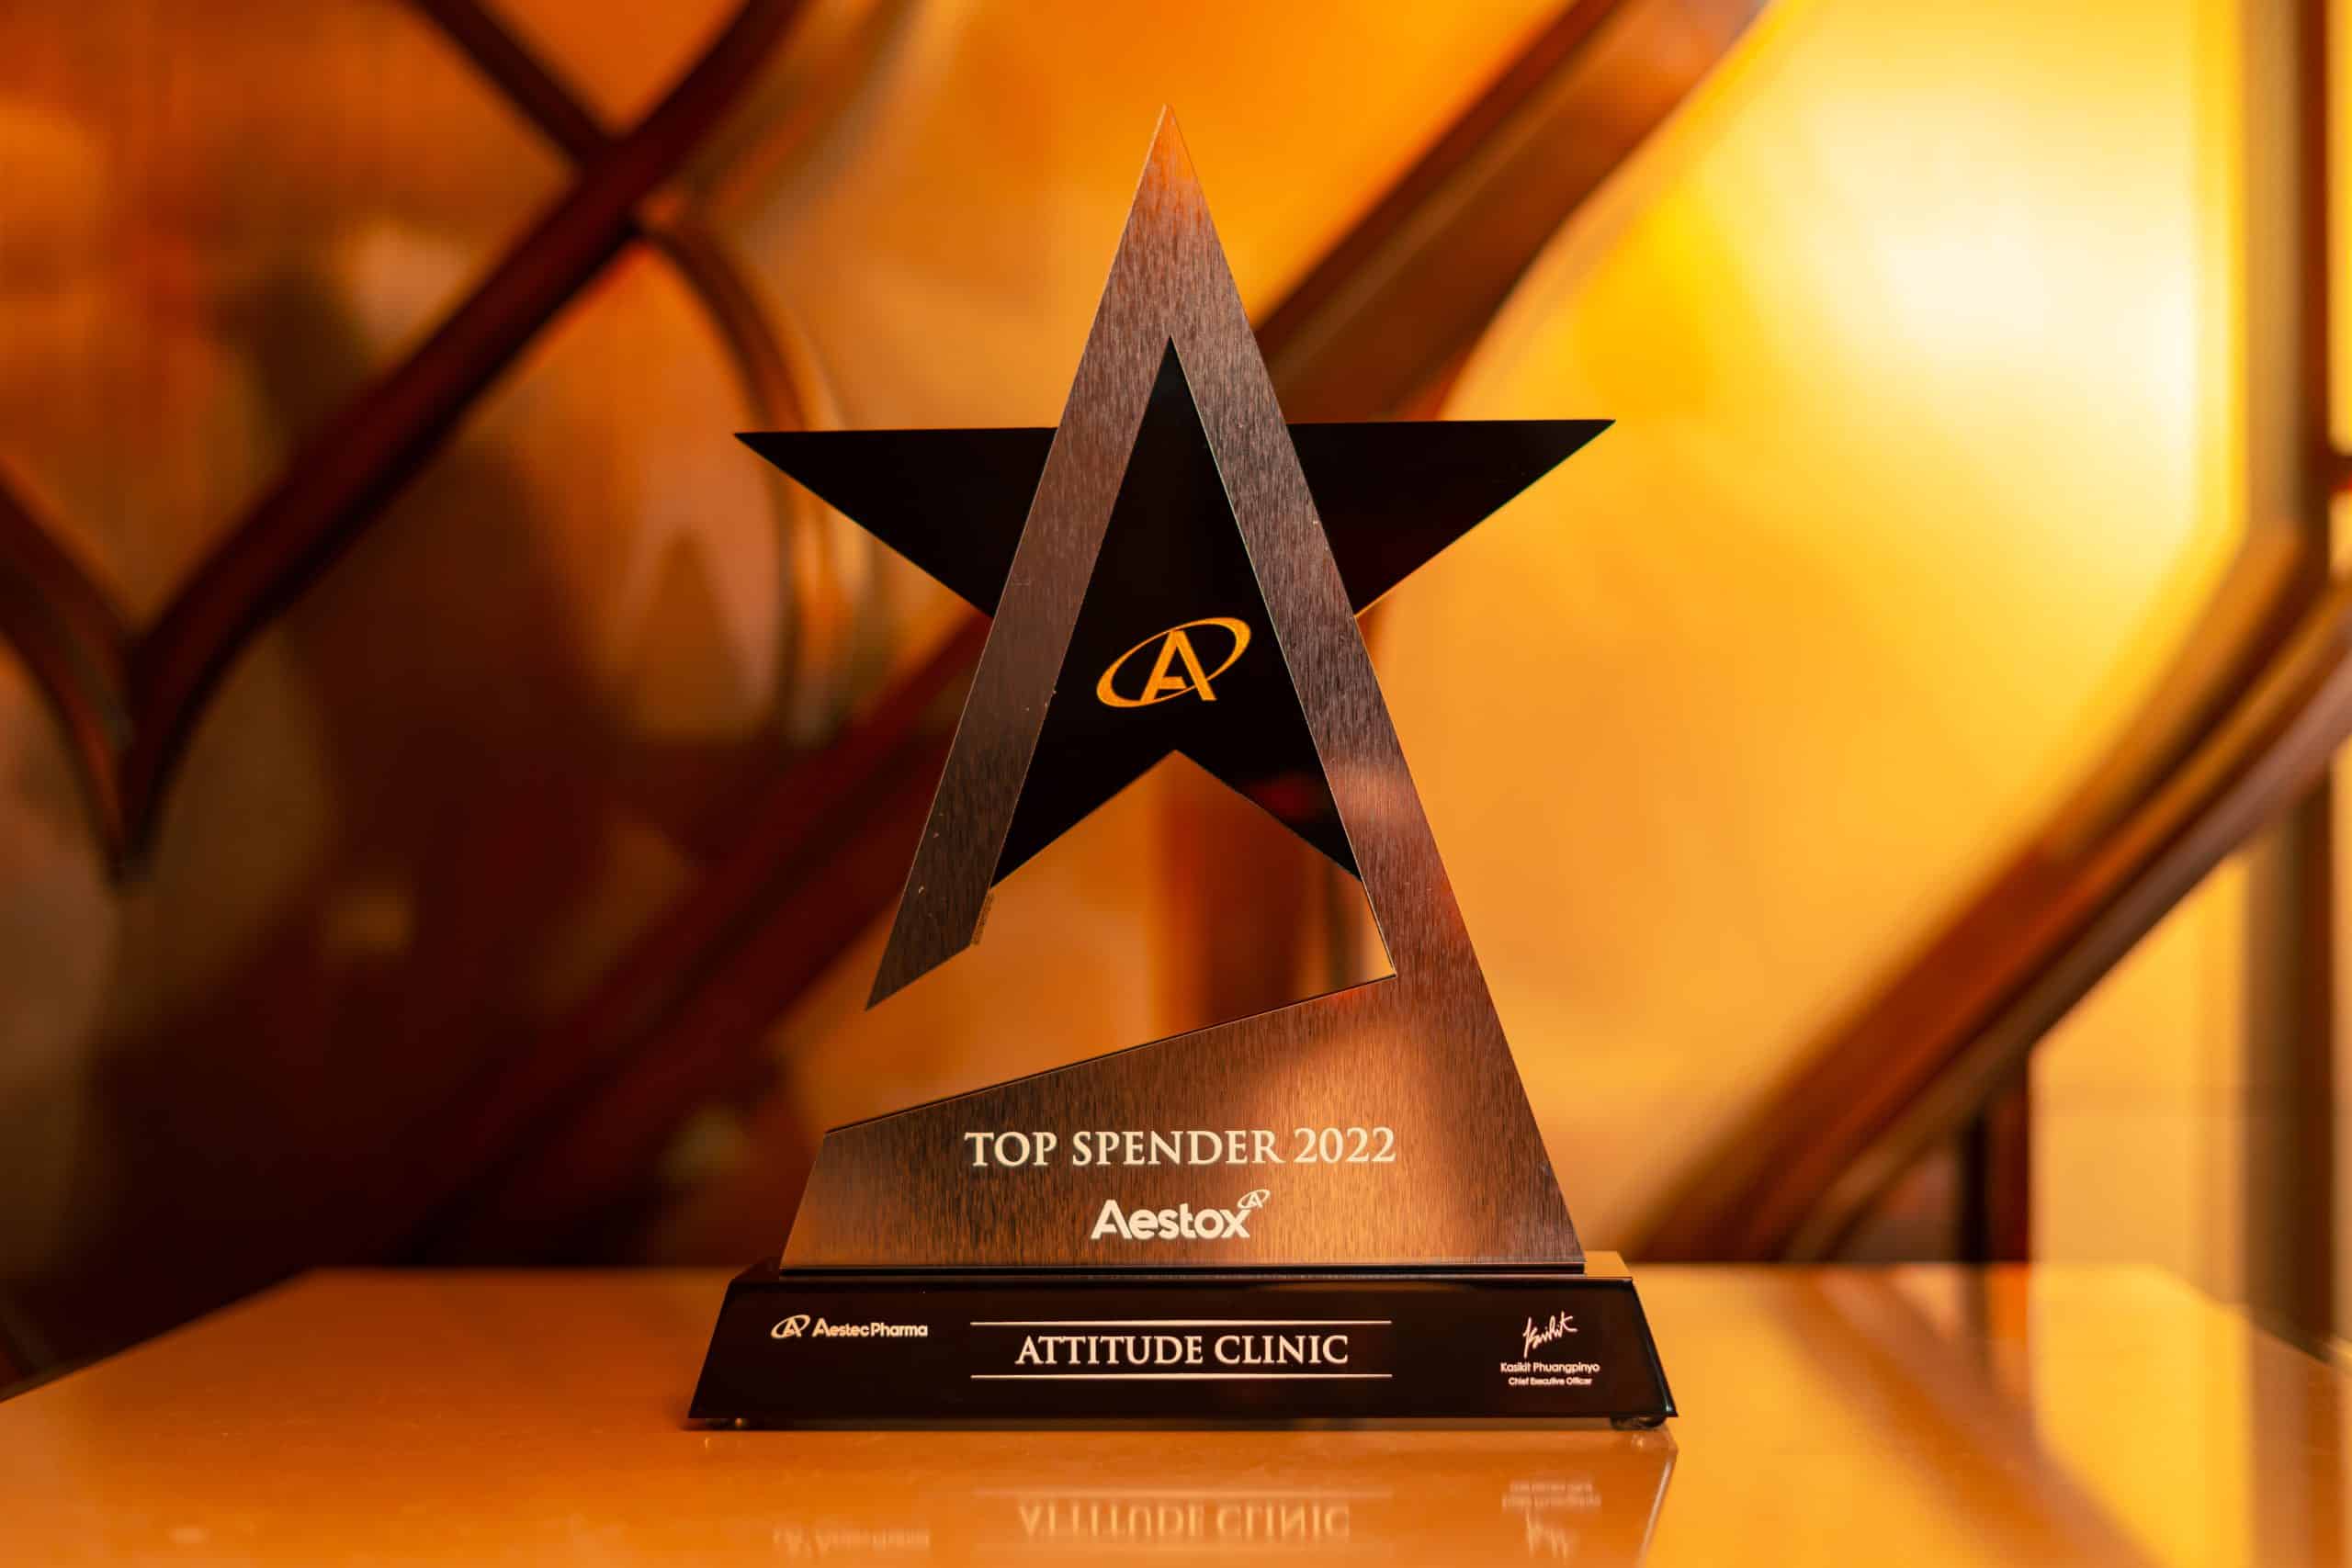 Attitude Clinic ได้รับรางวัล Top Spender Awards 2022 คลินิกที่มียอดใช้โบท็อกซ์ Aestox สูงสุดติด Top 20 ประเทศไทย และสูงสุดอันดับ 1 ภาคเหนือ เป็นคลินิกเดียวในภาคเหนือที่ได้รับรางวัลนี้อีกด้วย